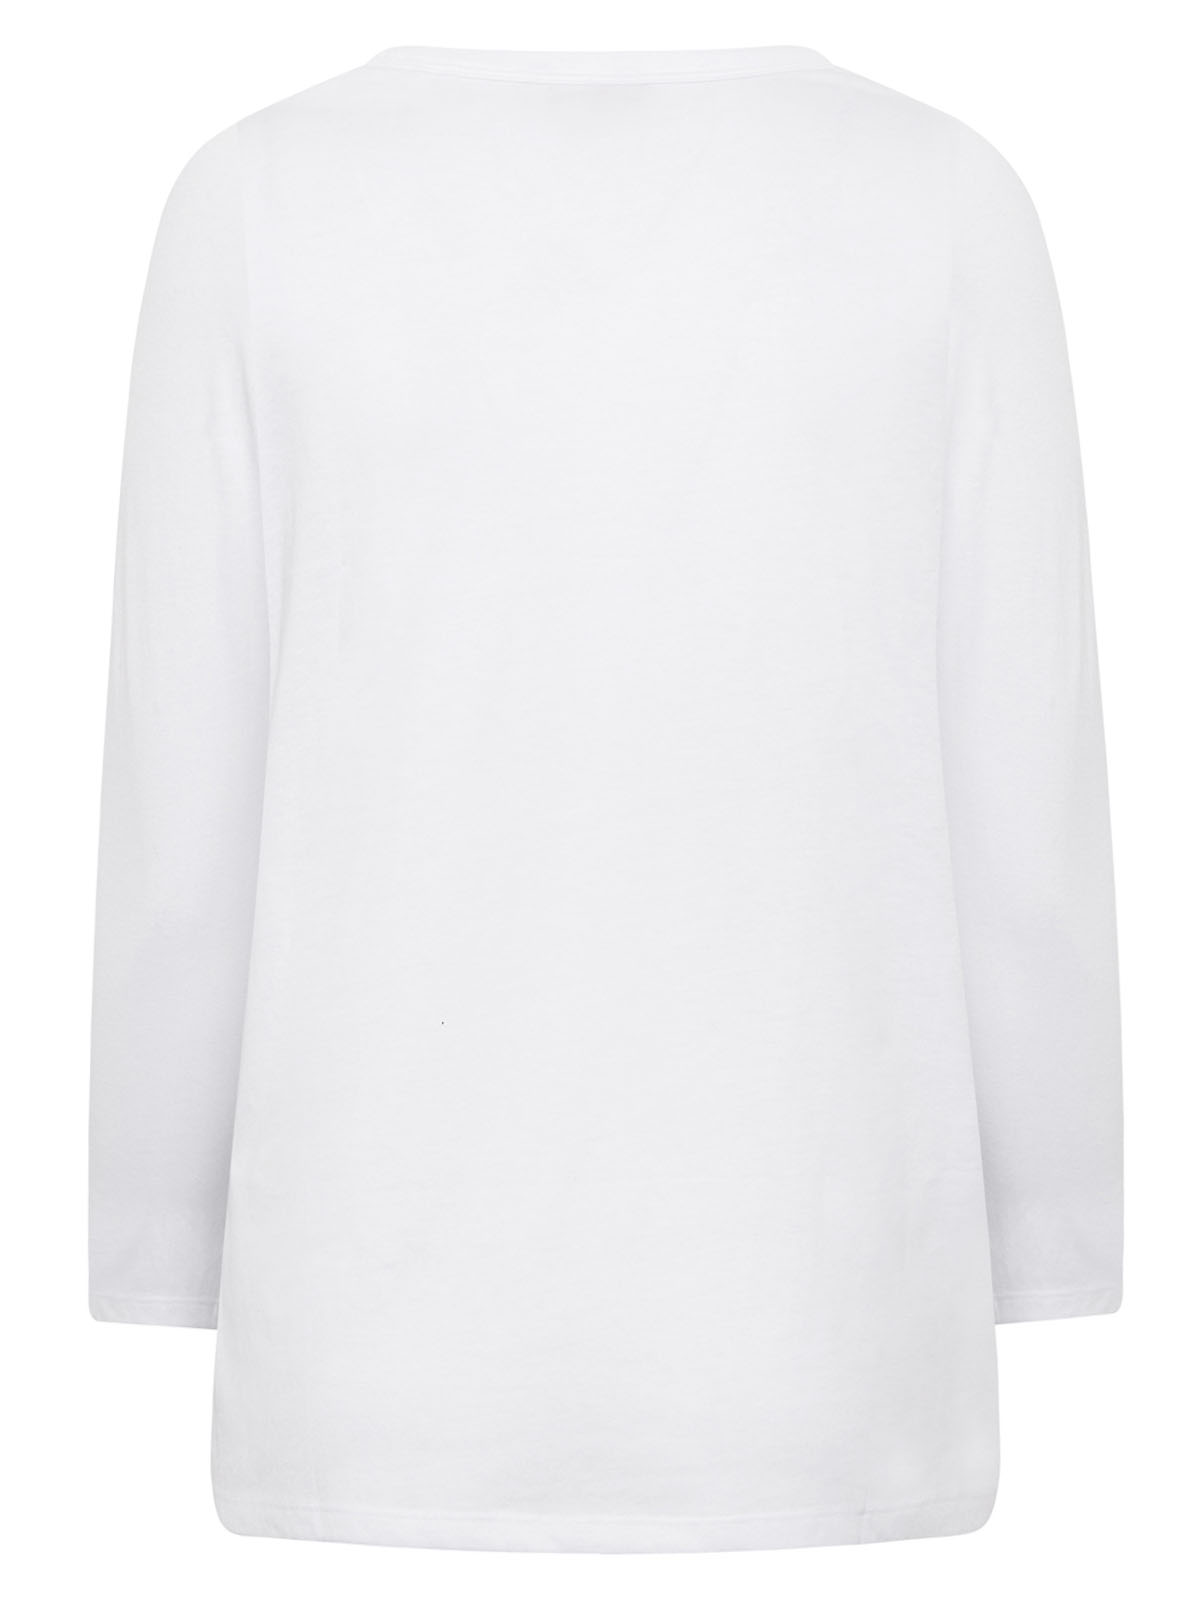 Cotton - Plus 38/40 to T-Shirt Sleeve Size WHITE Long CURVE - 14 - Rich